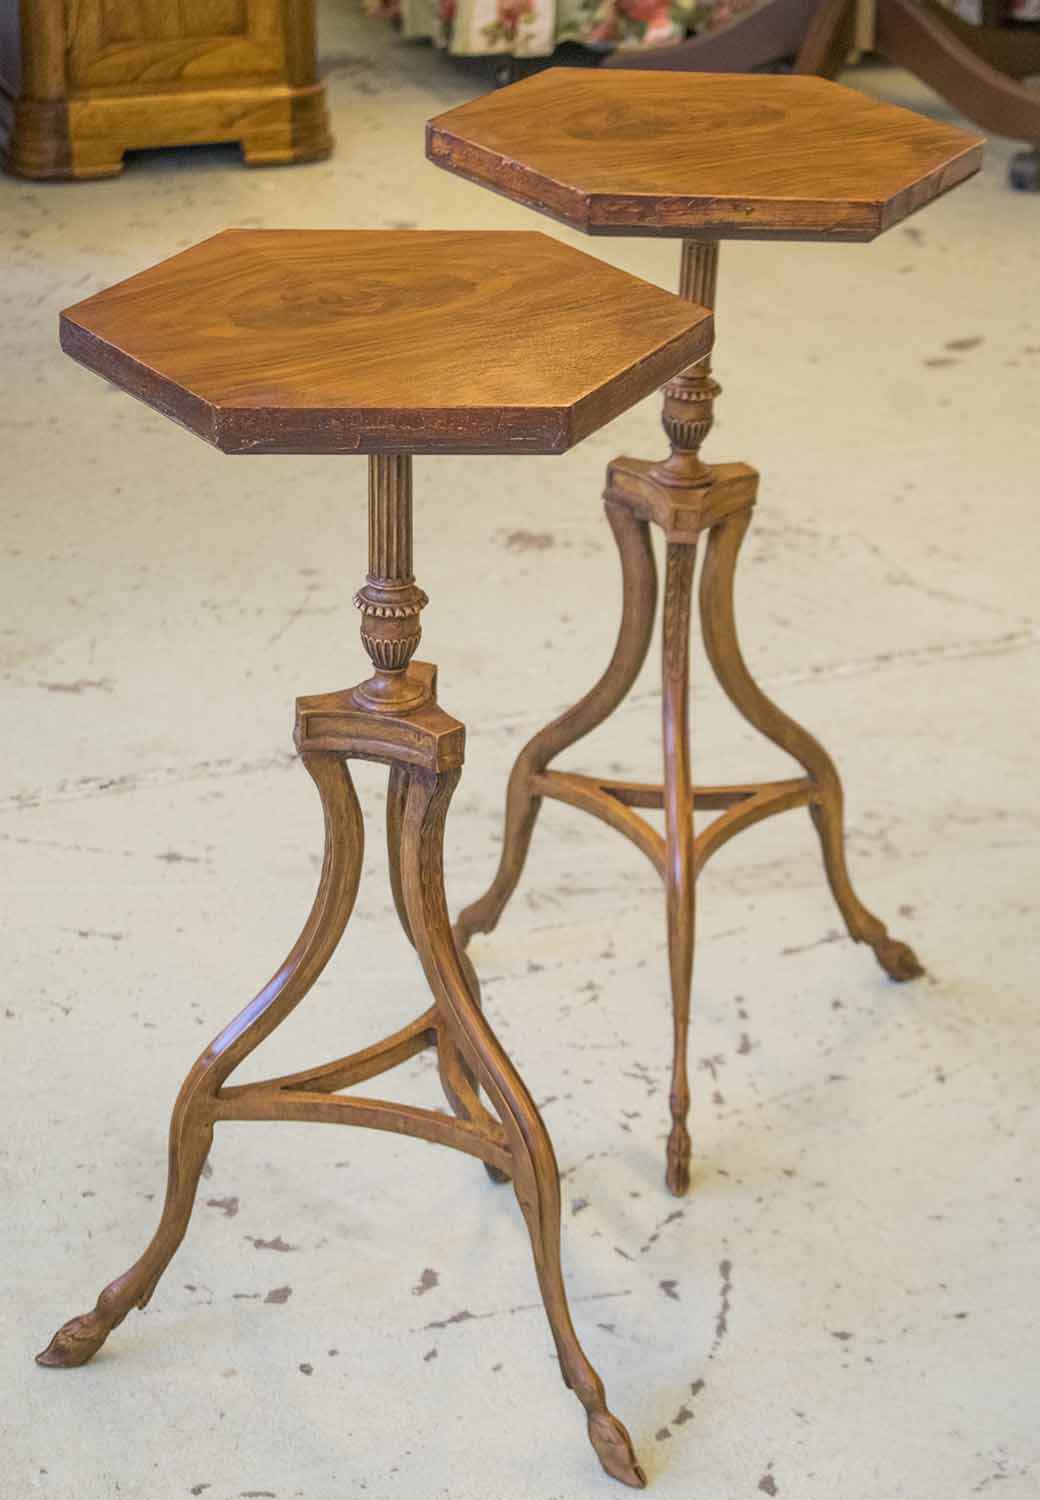 WINE TABLES, a pair, Georgian style walnut with hexagonal tops and hoof feet, 73cm H x 39cm x 34cm.